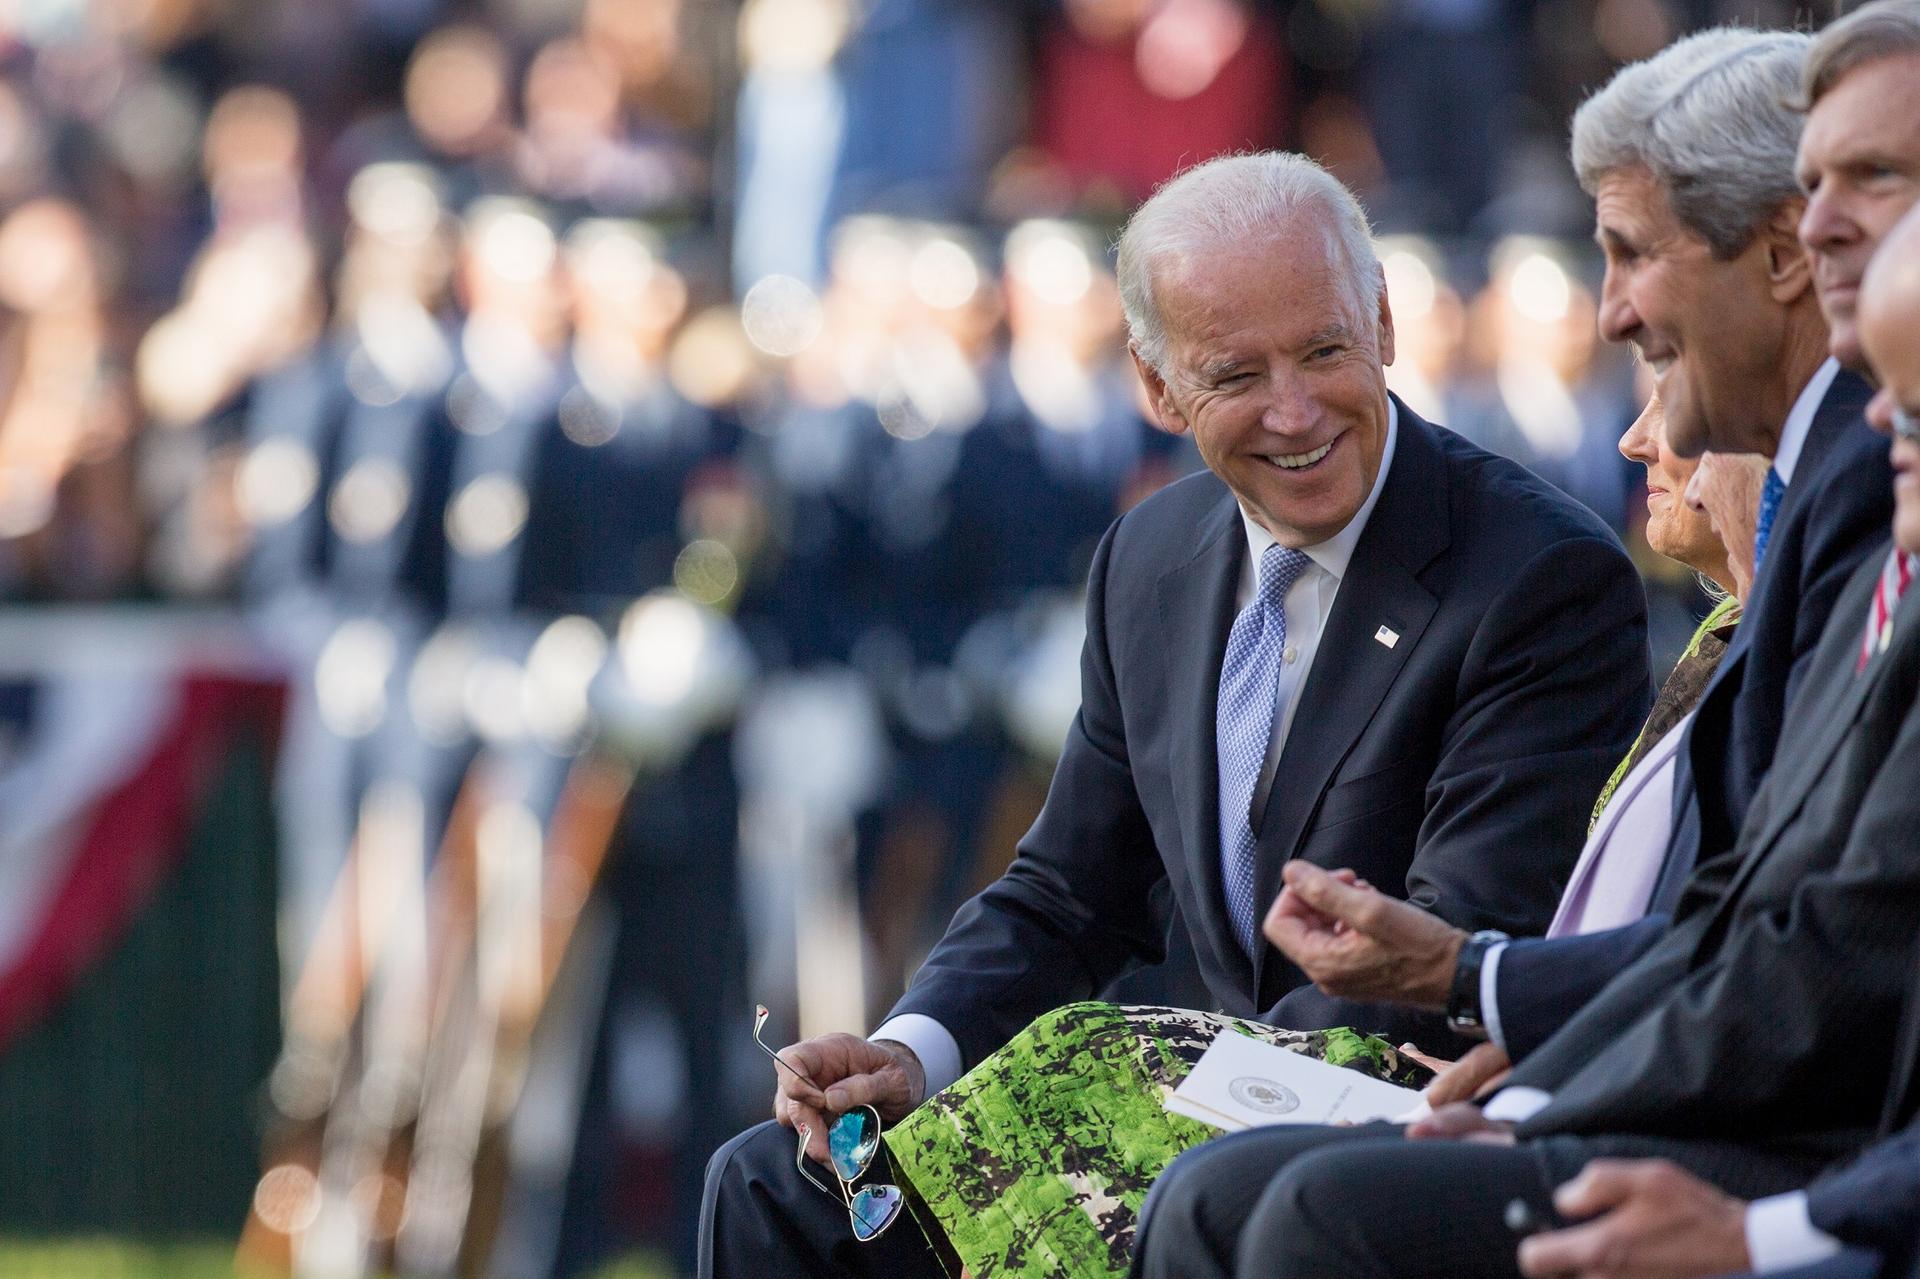 Joe Biden sitting next to John Kerry at an event in 2015